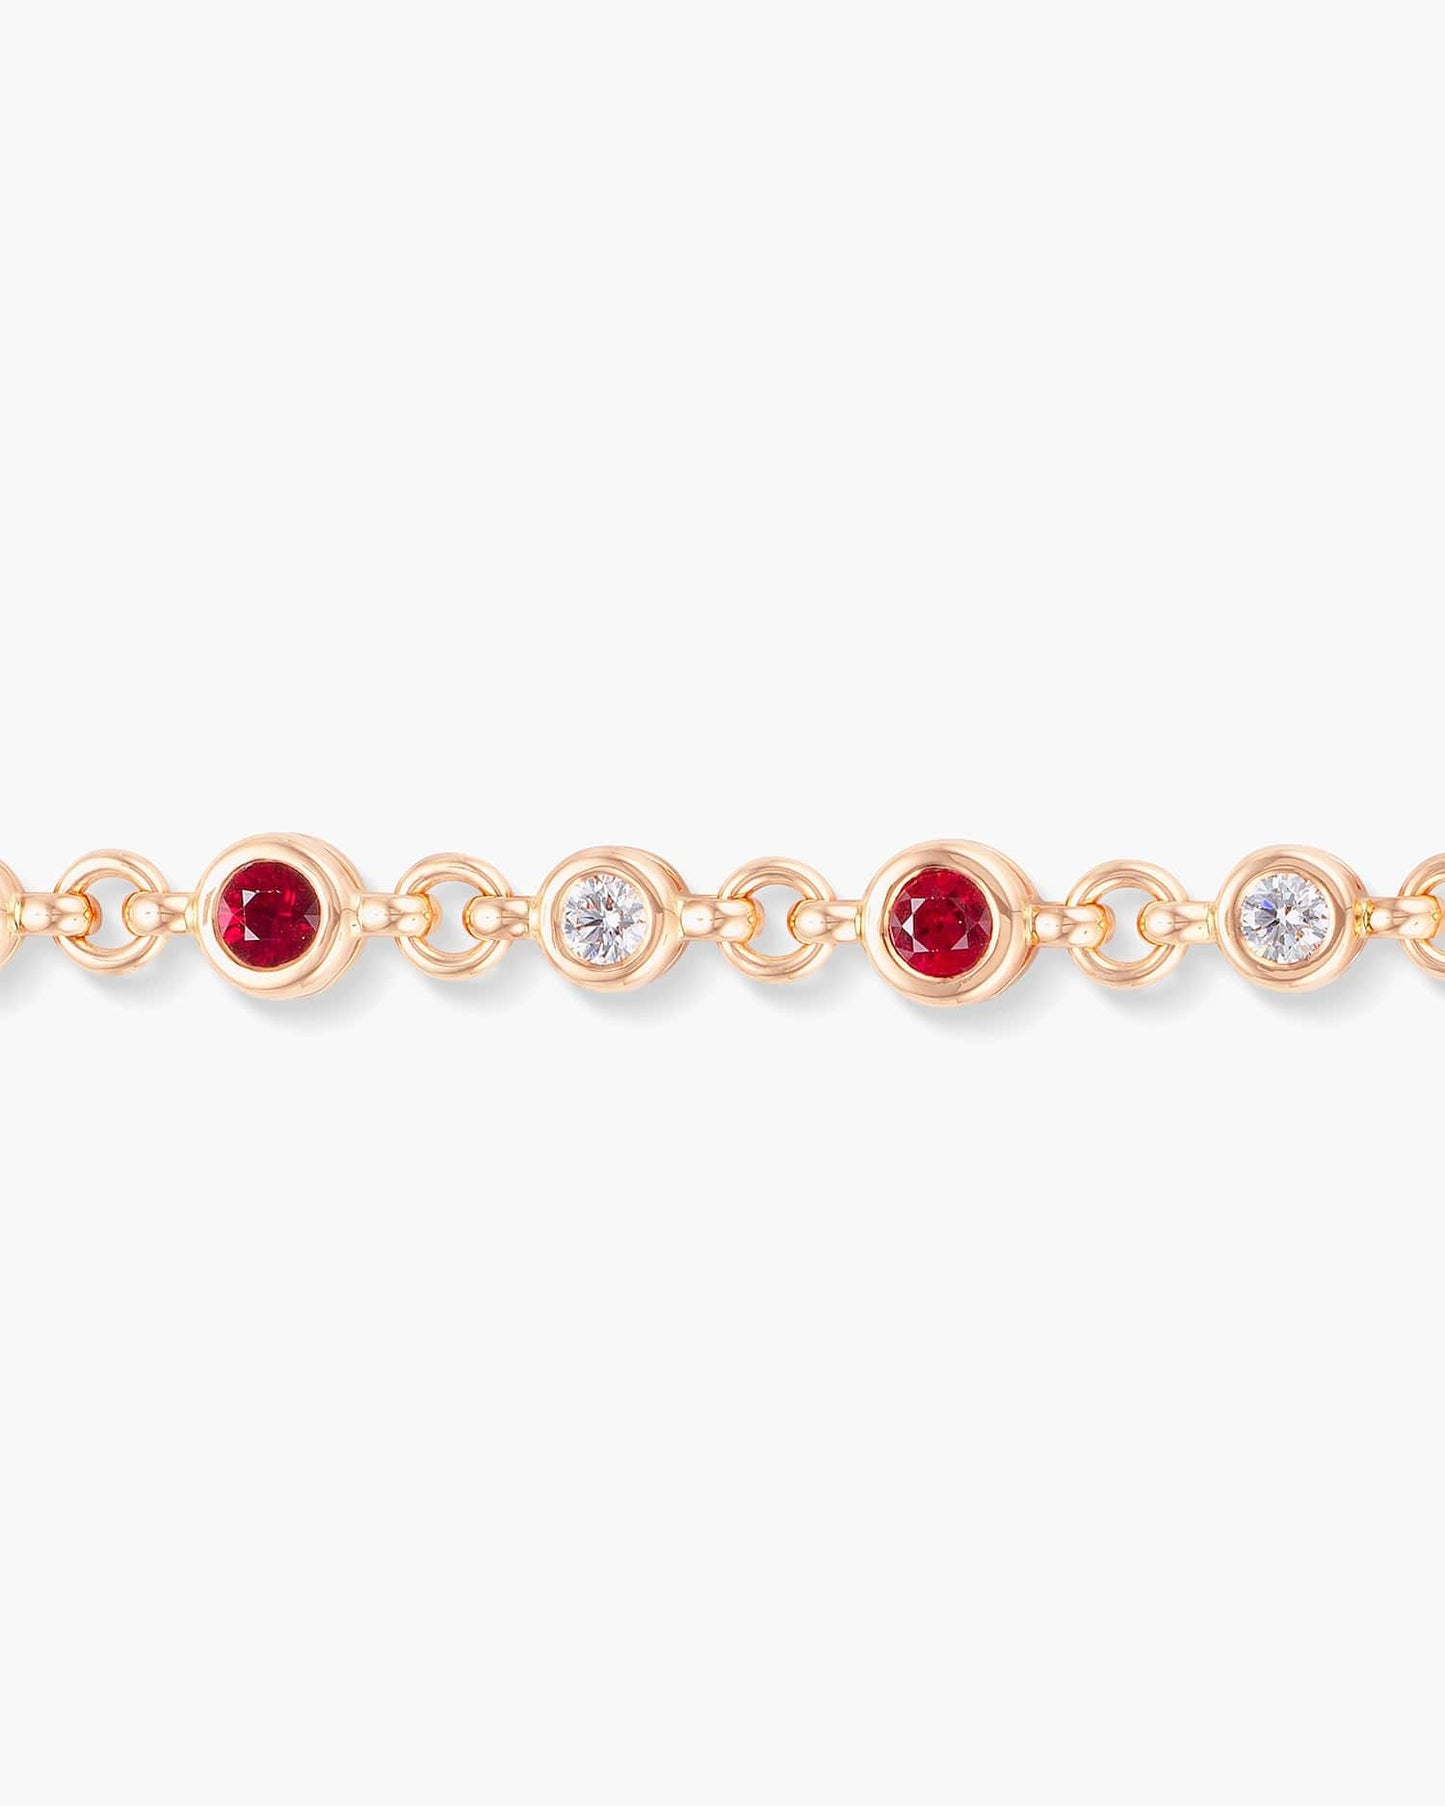 Burmese Ruby and Diamond Bracelet